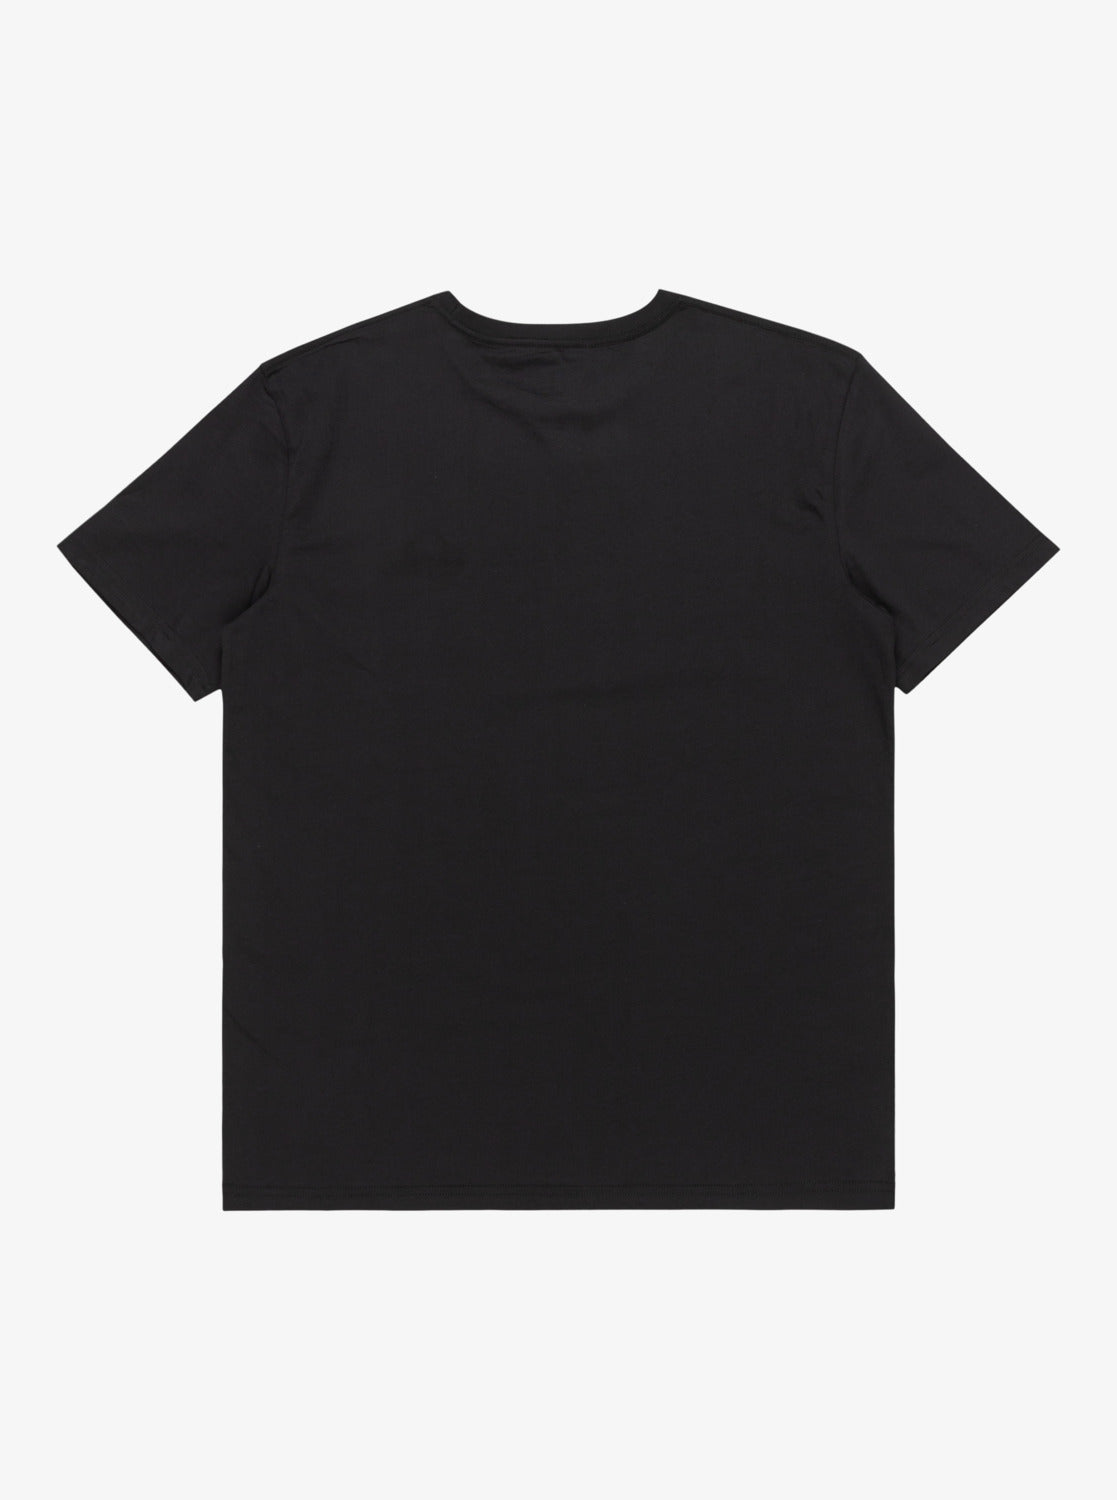 Quiksilver MV Mini T-Shirt in Black